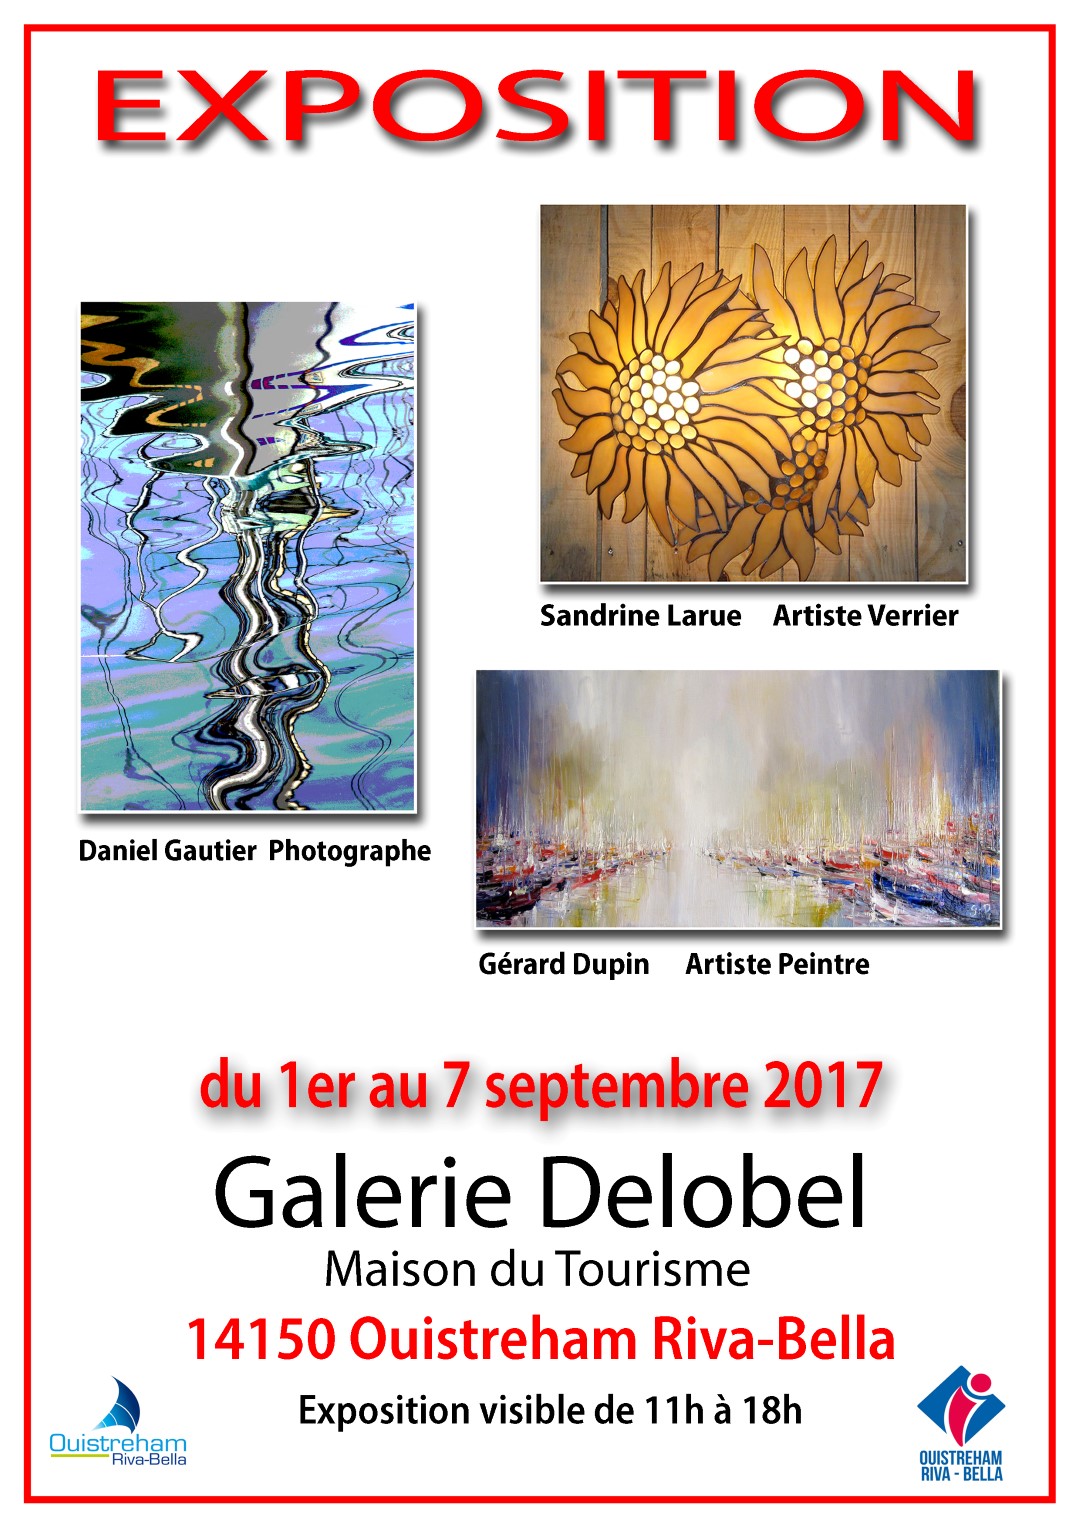 Exposition Galerie Delobel, Ouistreham Riva-Bella du 1er au 7 septembre 2017